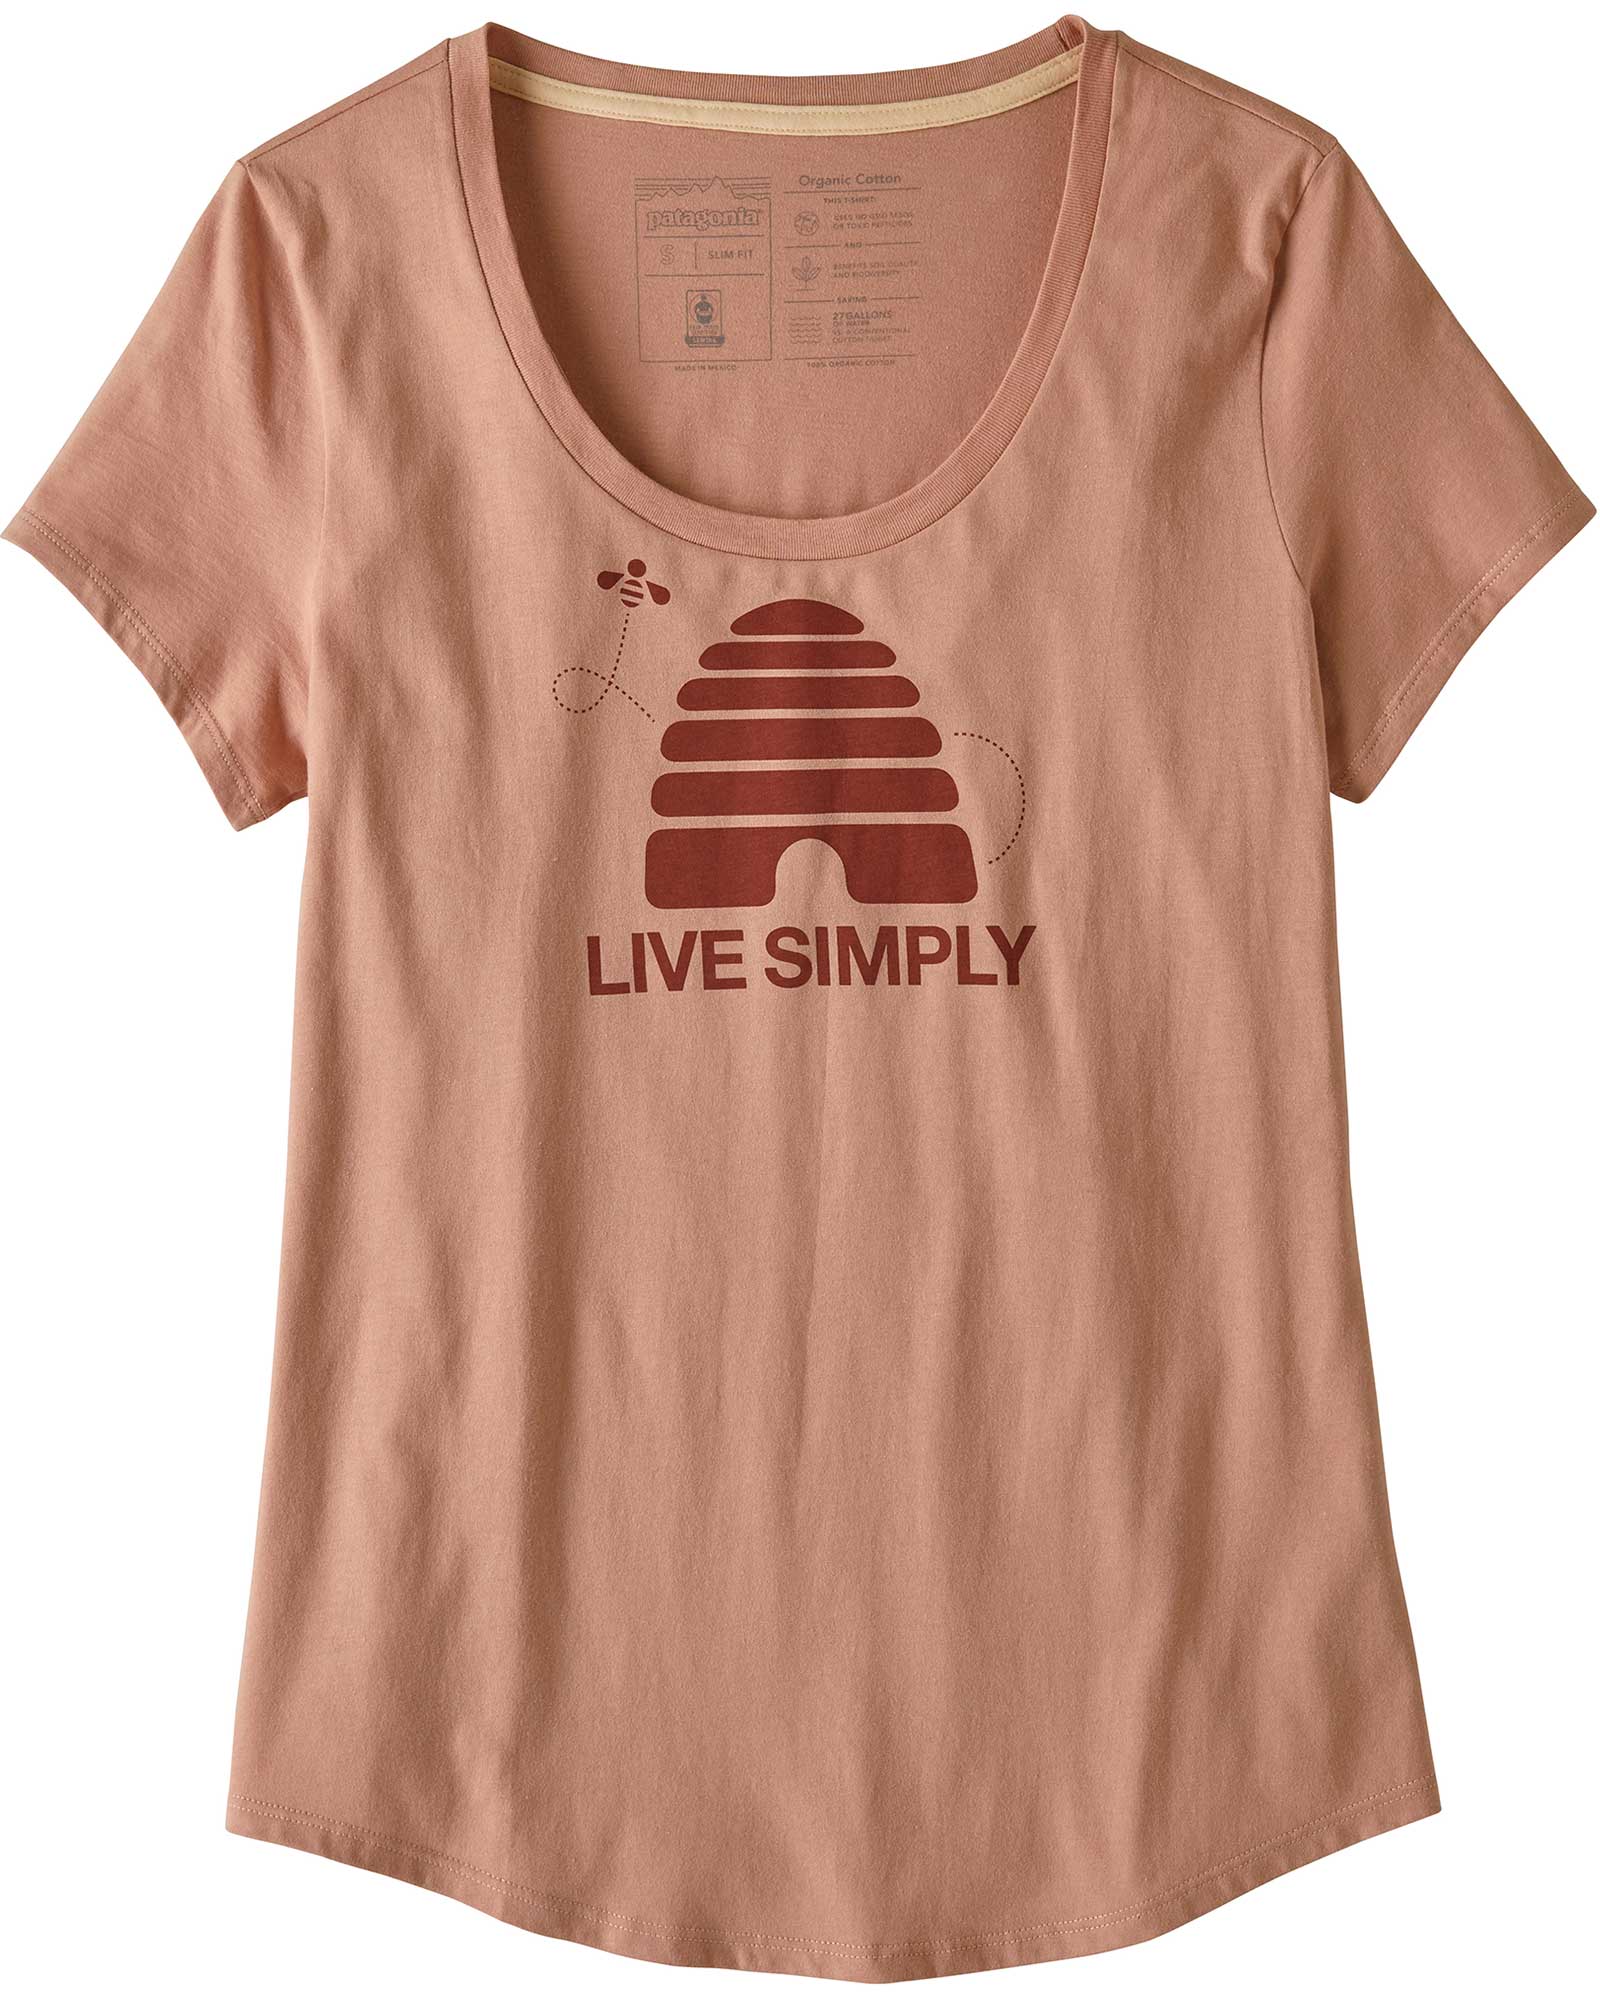 Patagonia Live Simply Hive Organic Women’s Scoop T Shirt - Scotch Pink XL